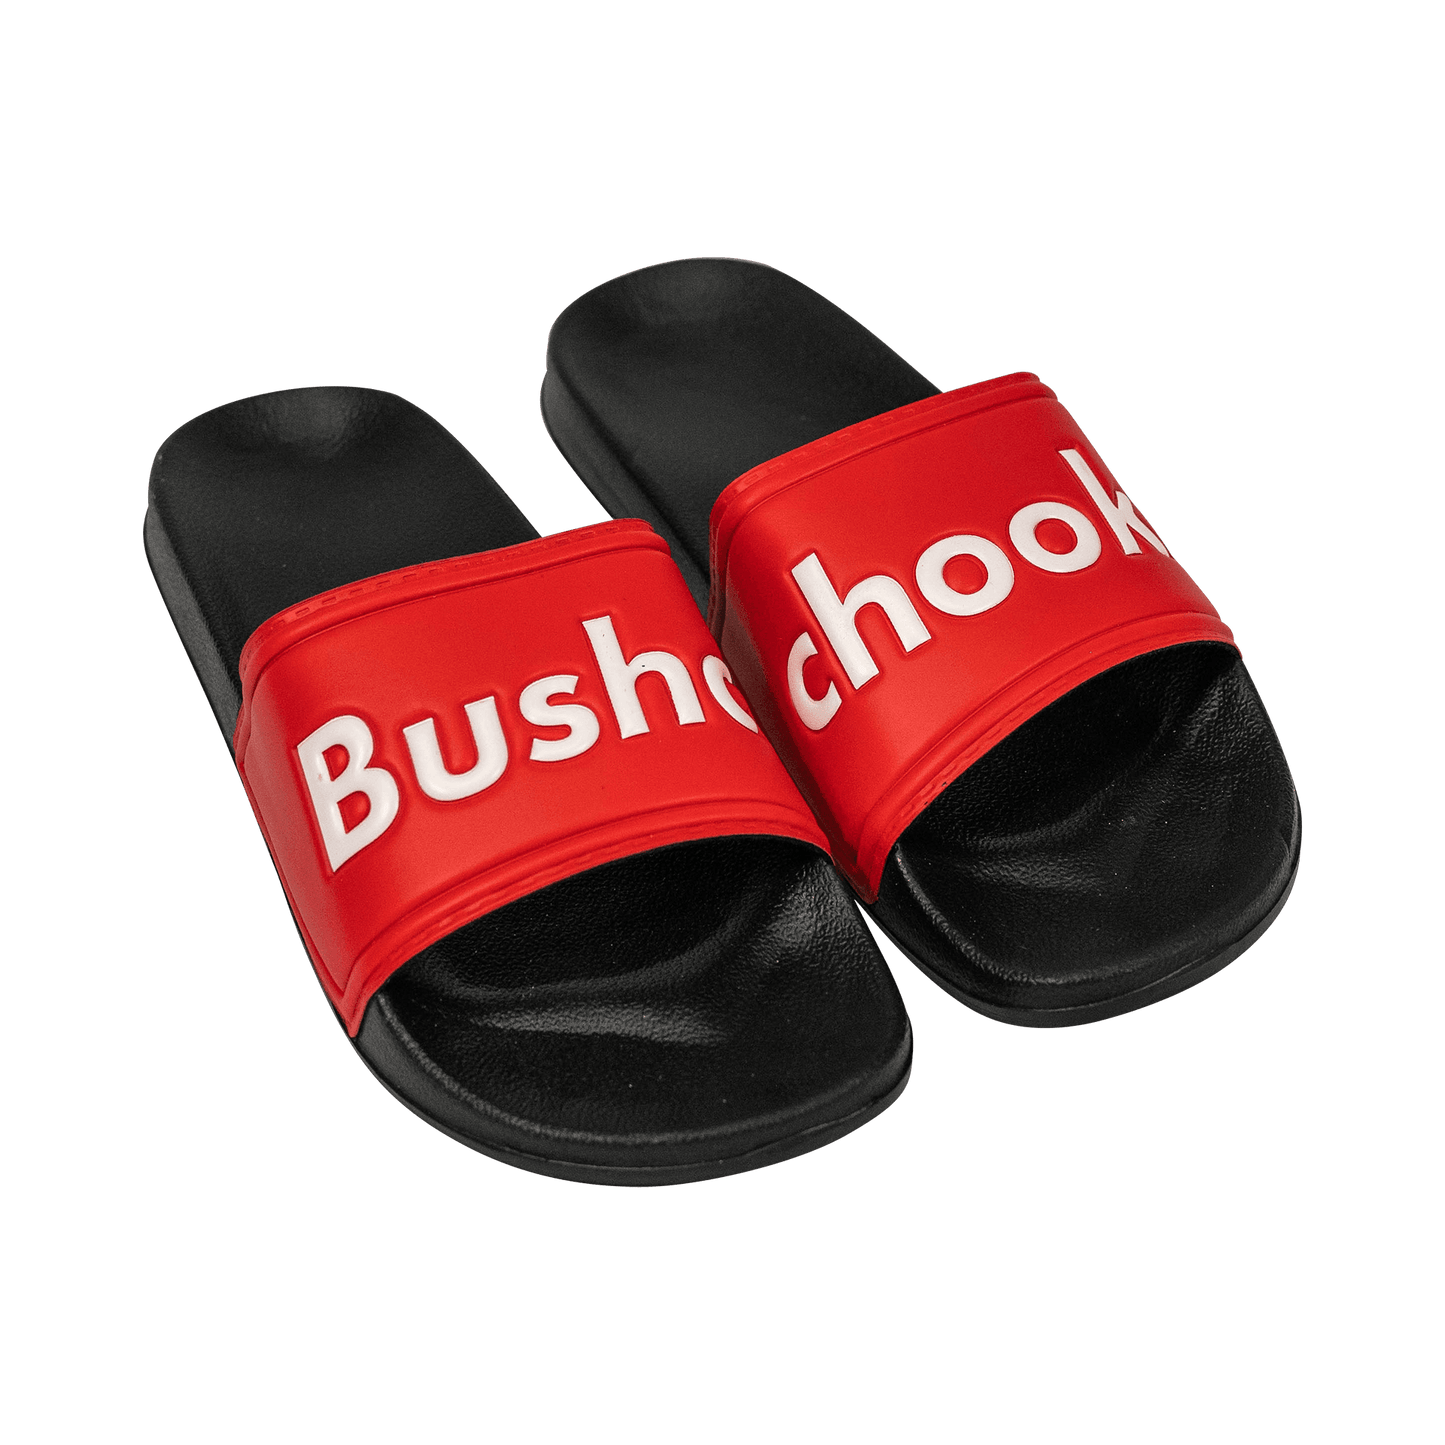 Bushpreme Slides